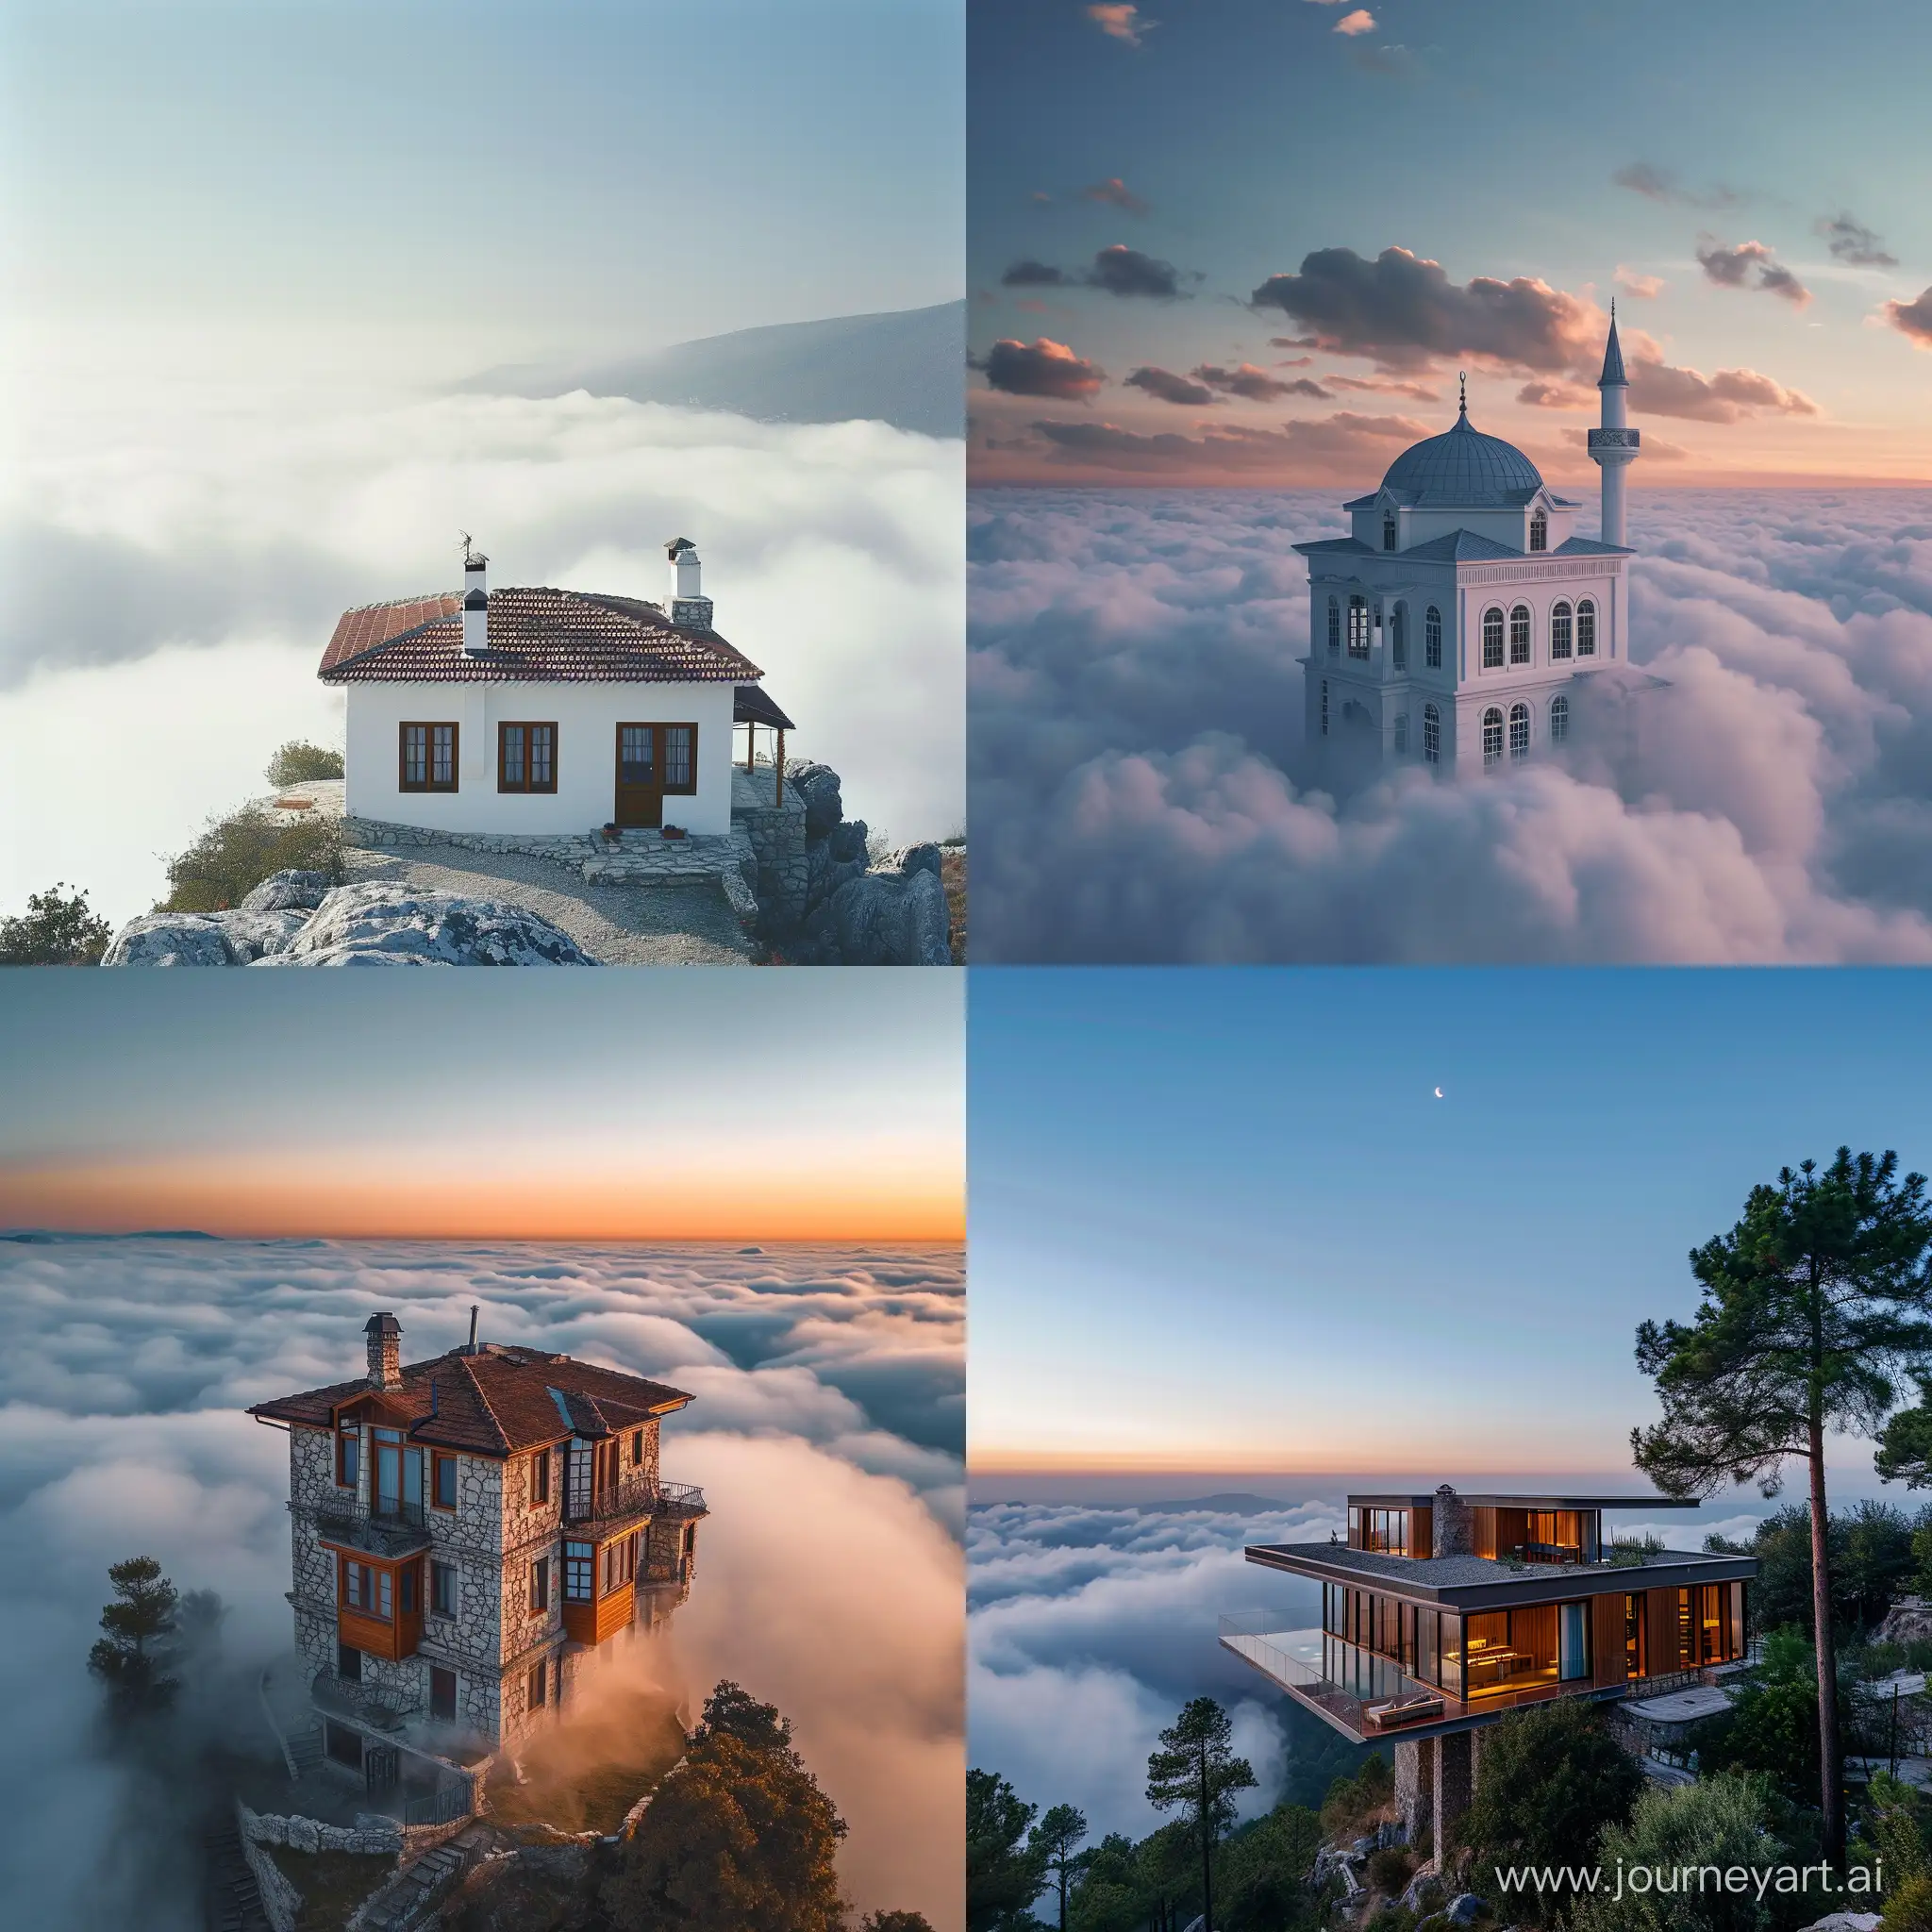 Turkish-House-Artnevou-Above-the-Clouds-Unique-11-Aspect-Ratio-Image-79297